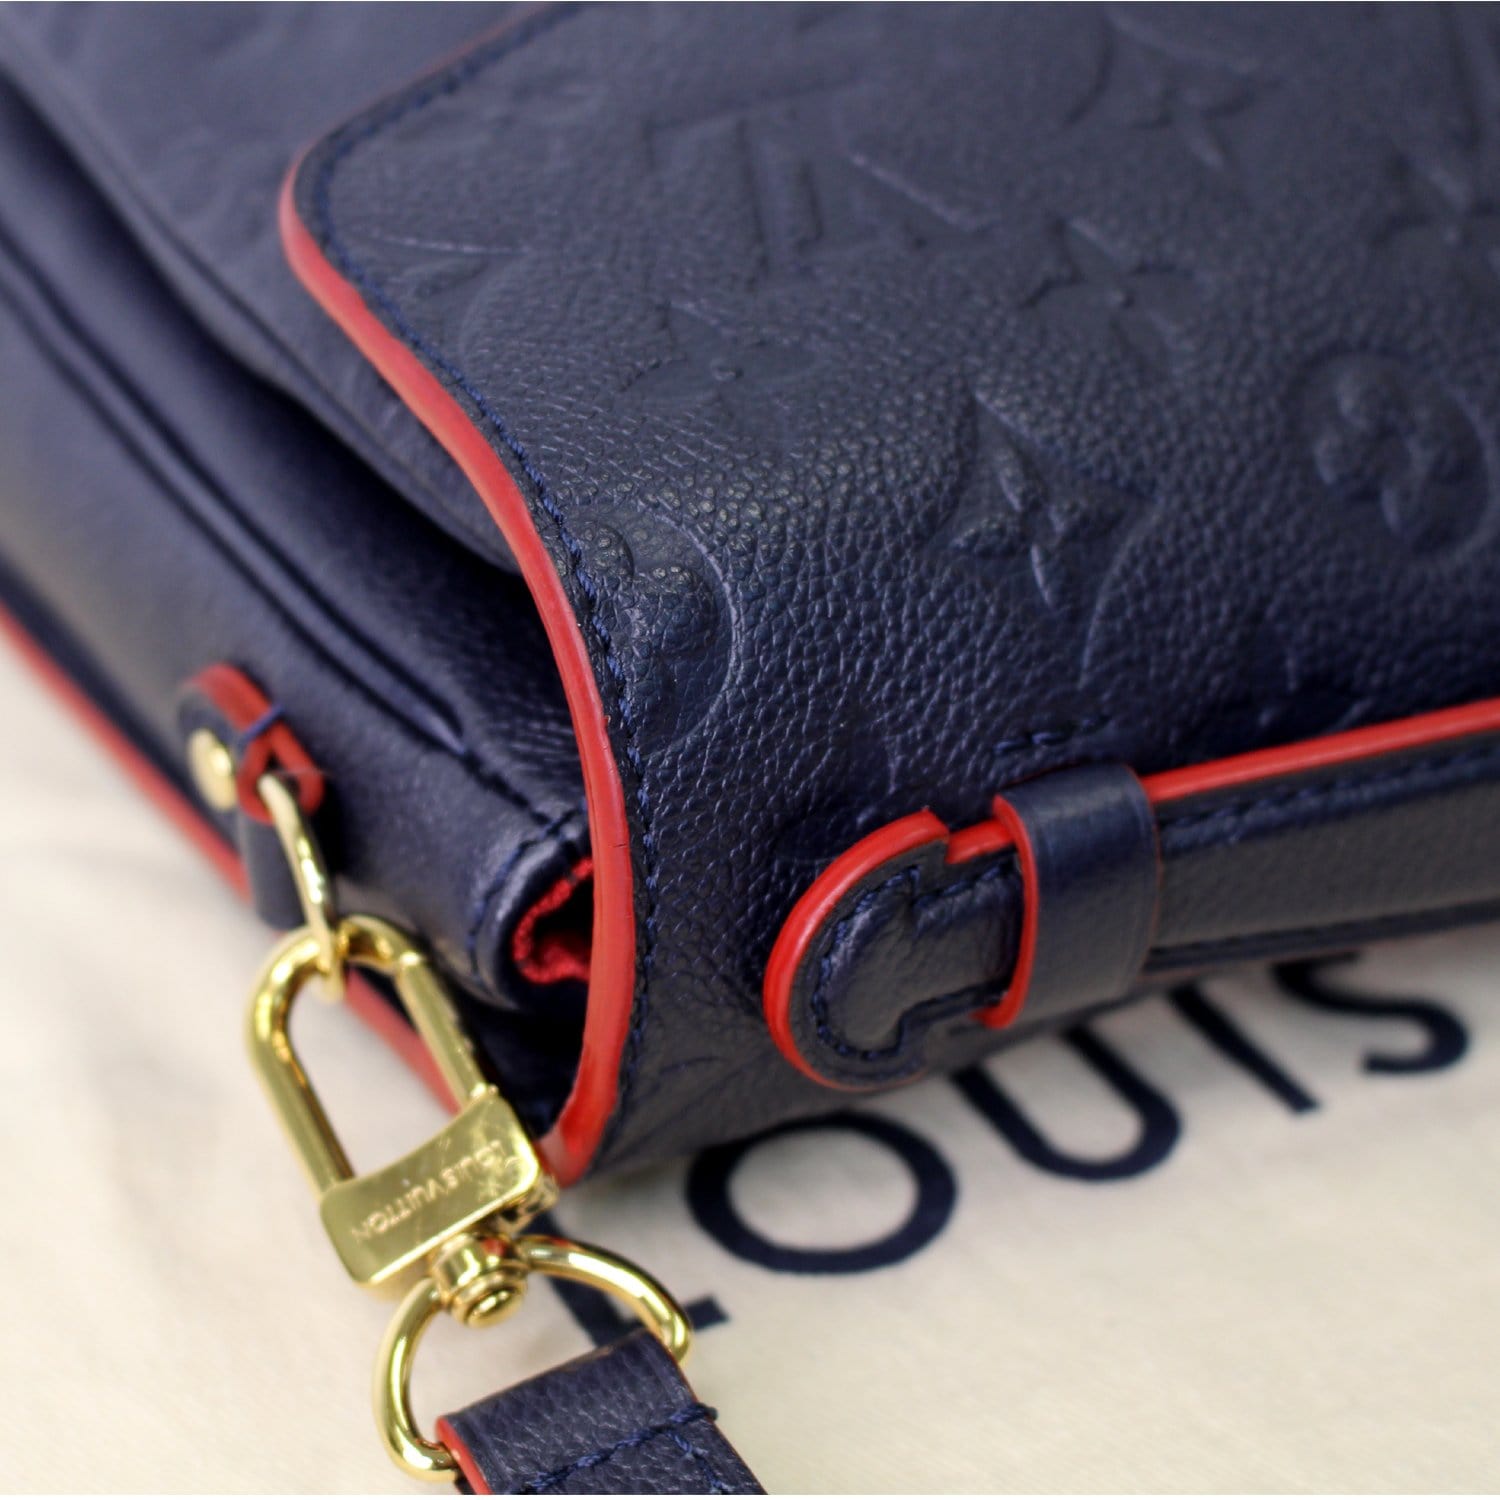 Metis cloth crossbody bag Louis Vuitton Blue in Cloth - 35584639